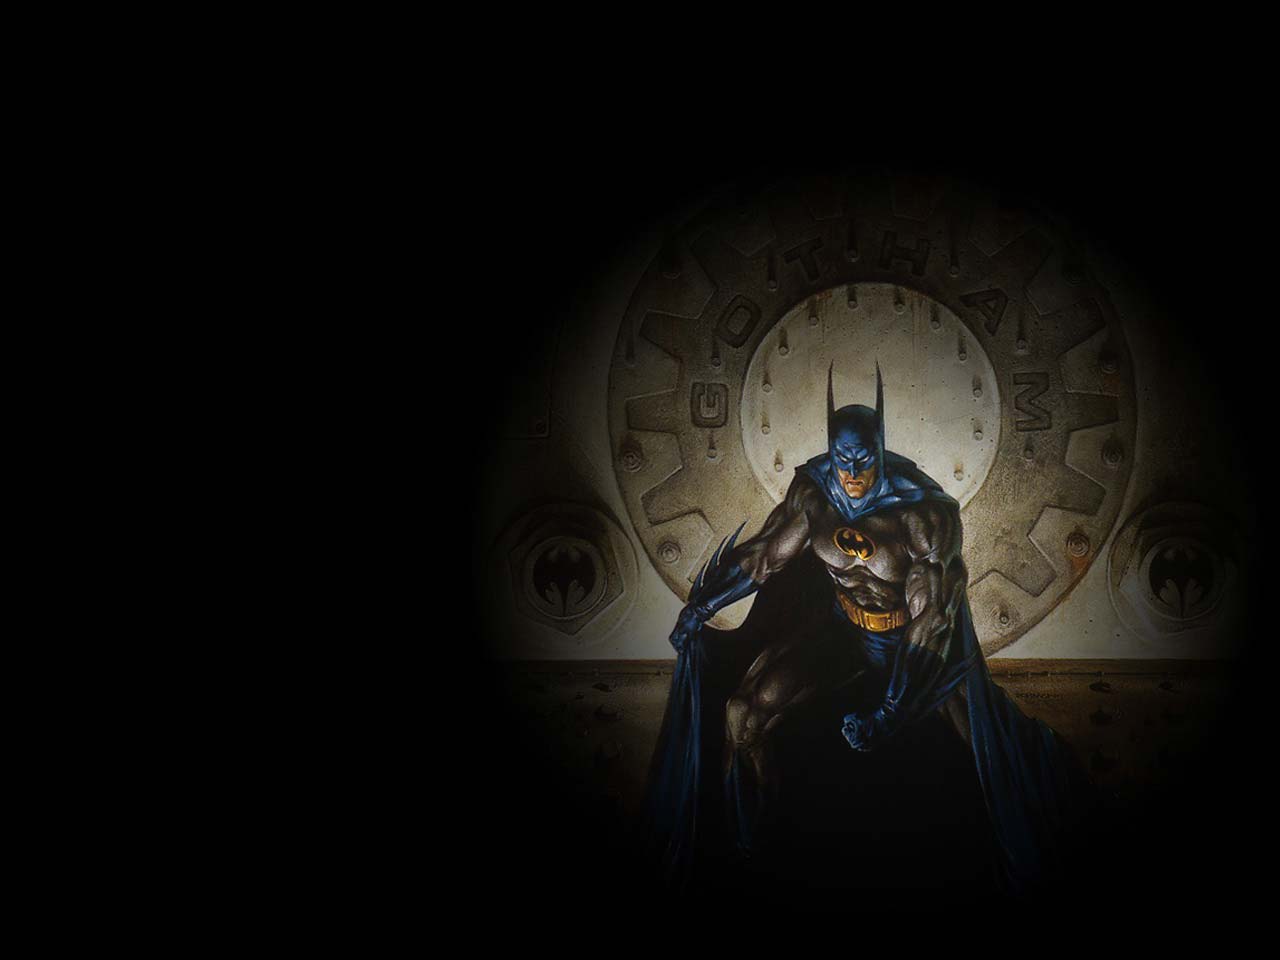 Batman Desktop Background Wallpaper and Background